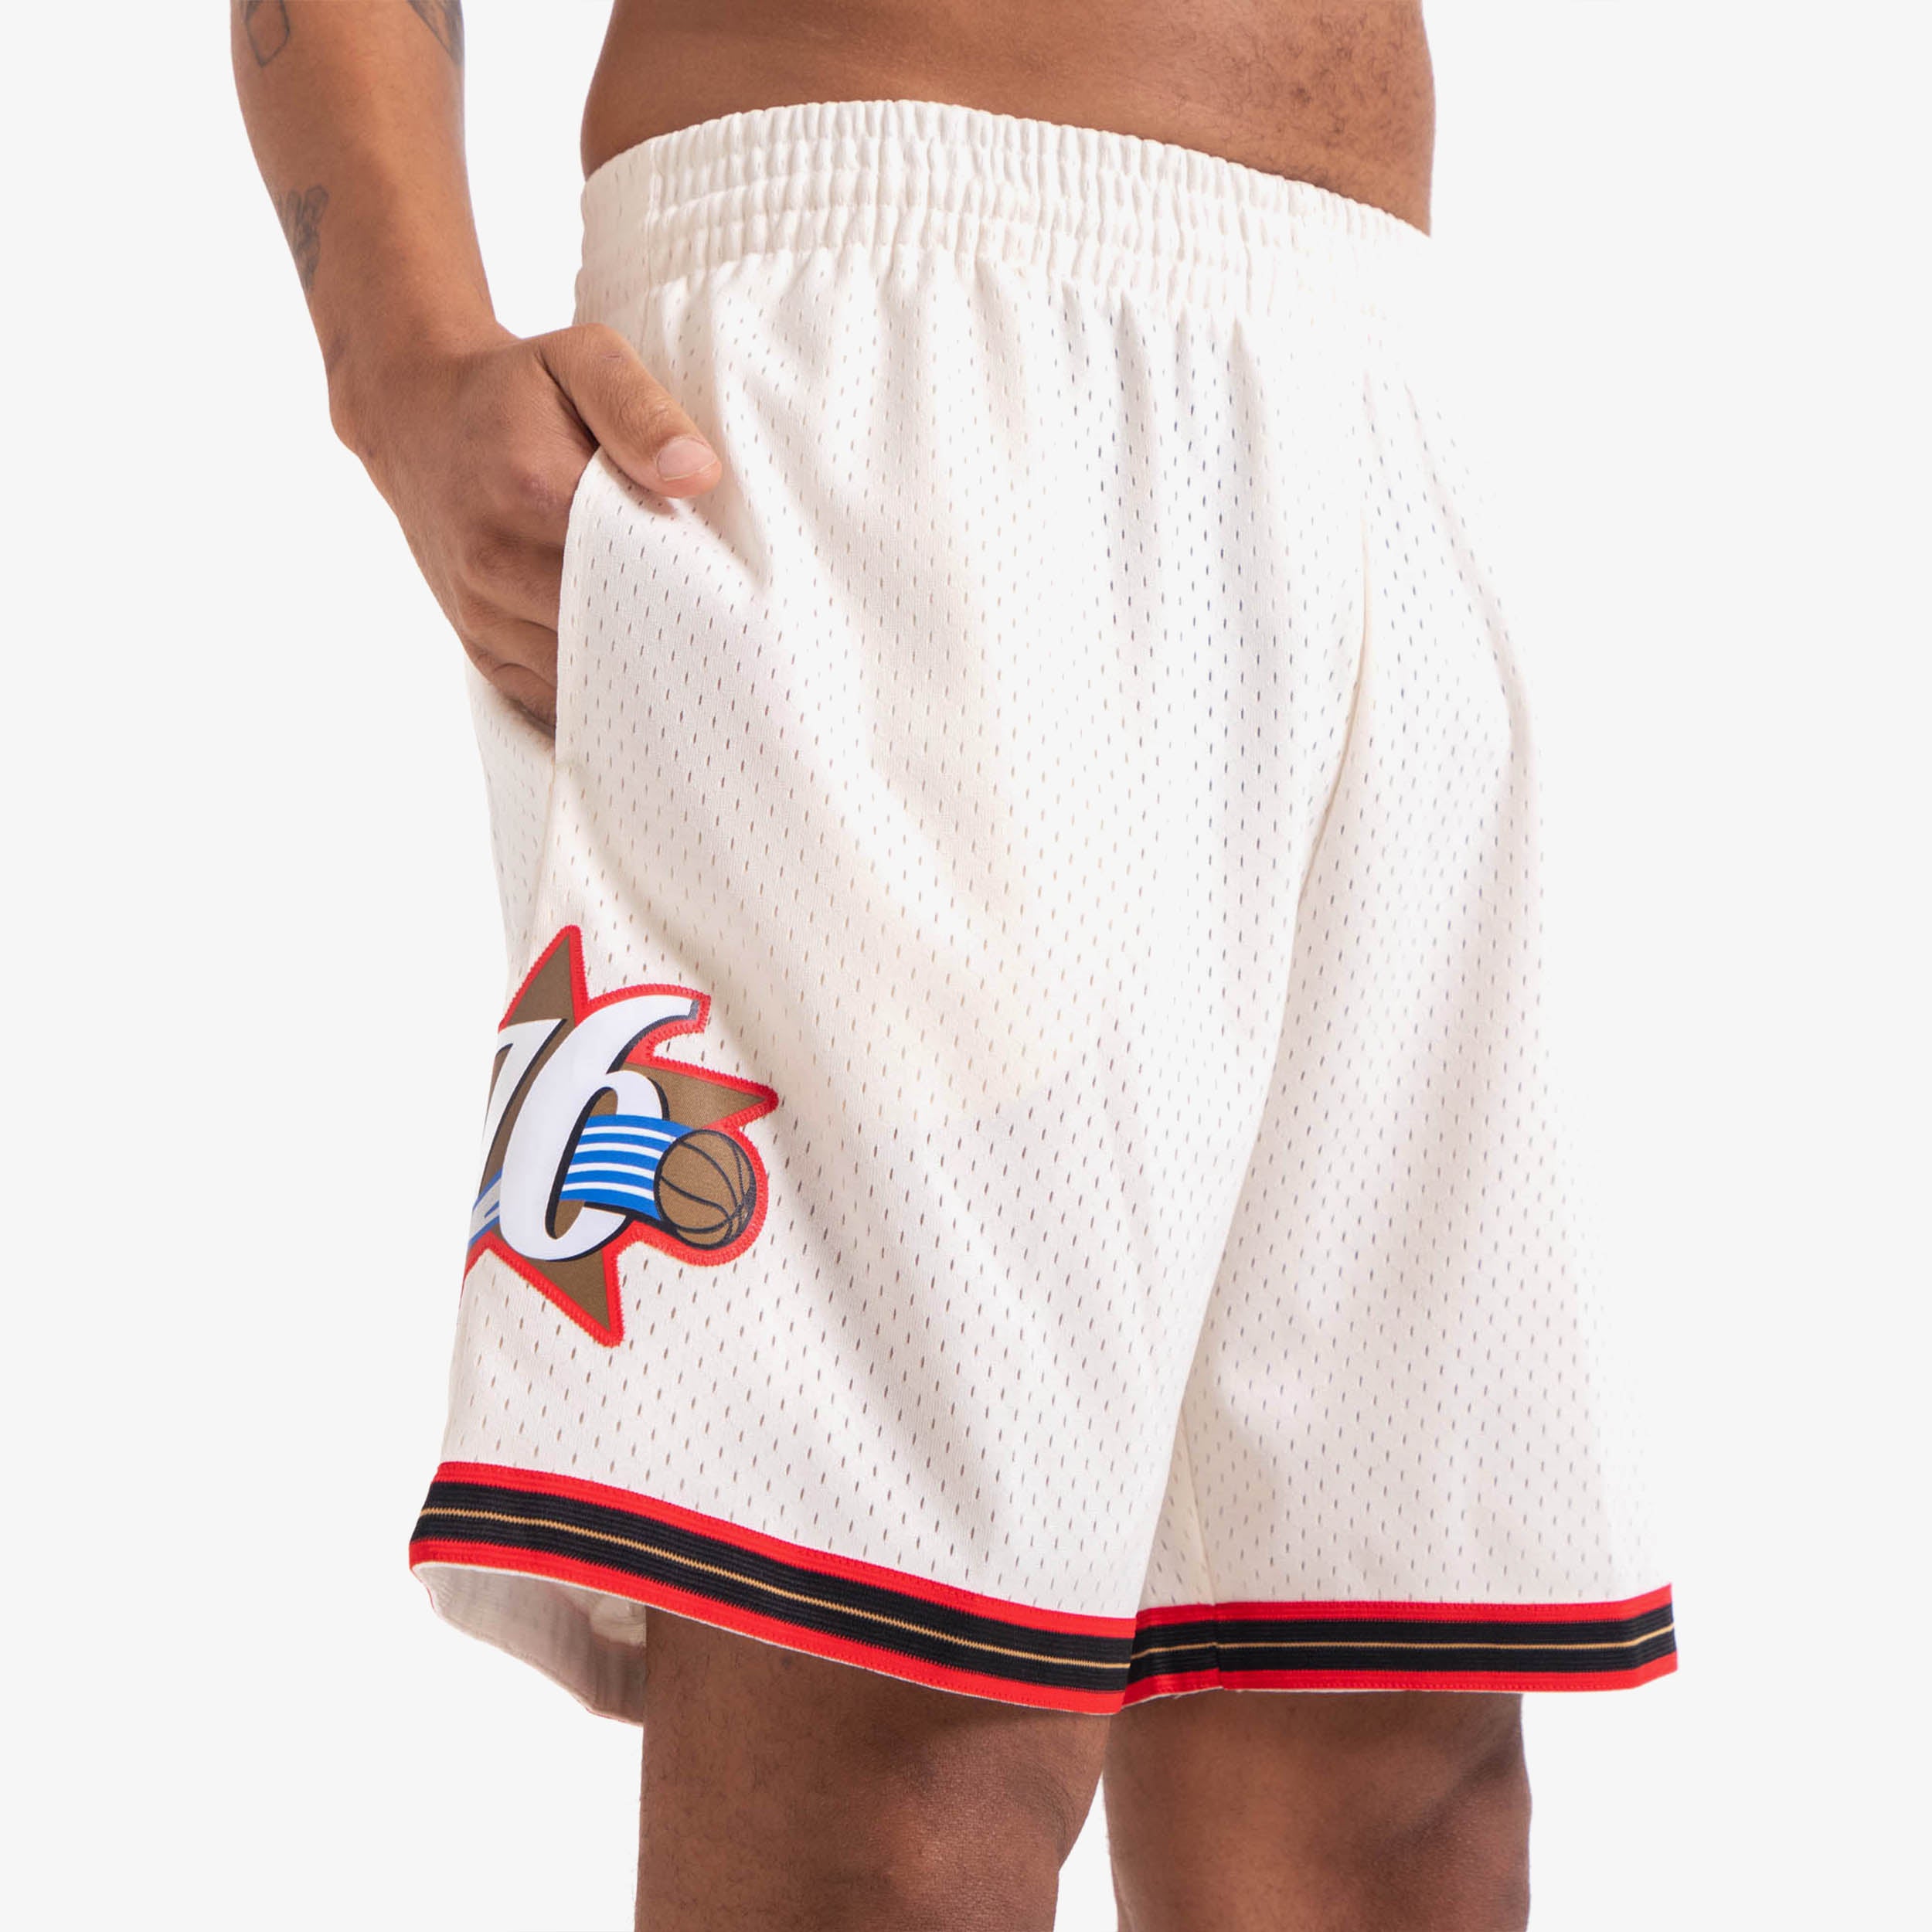 white 76ers shorts